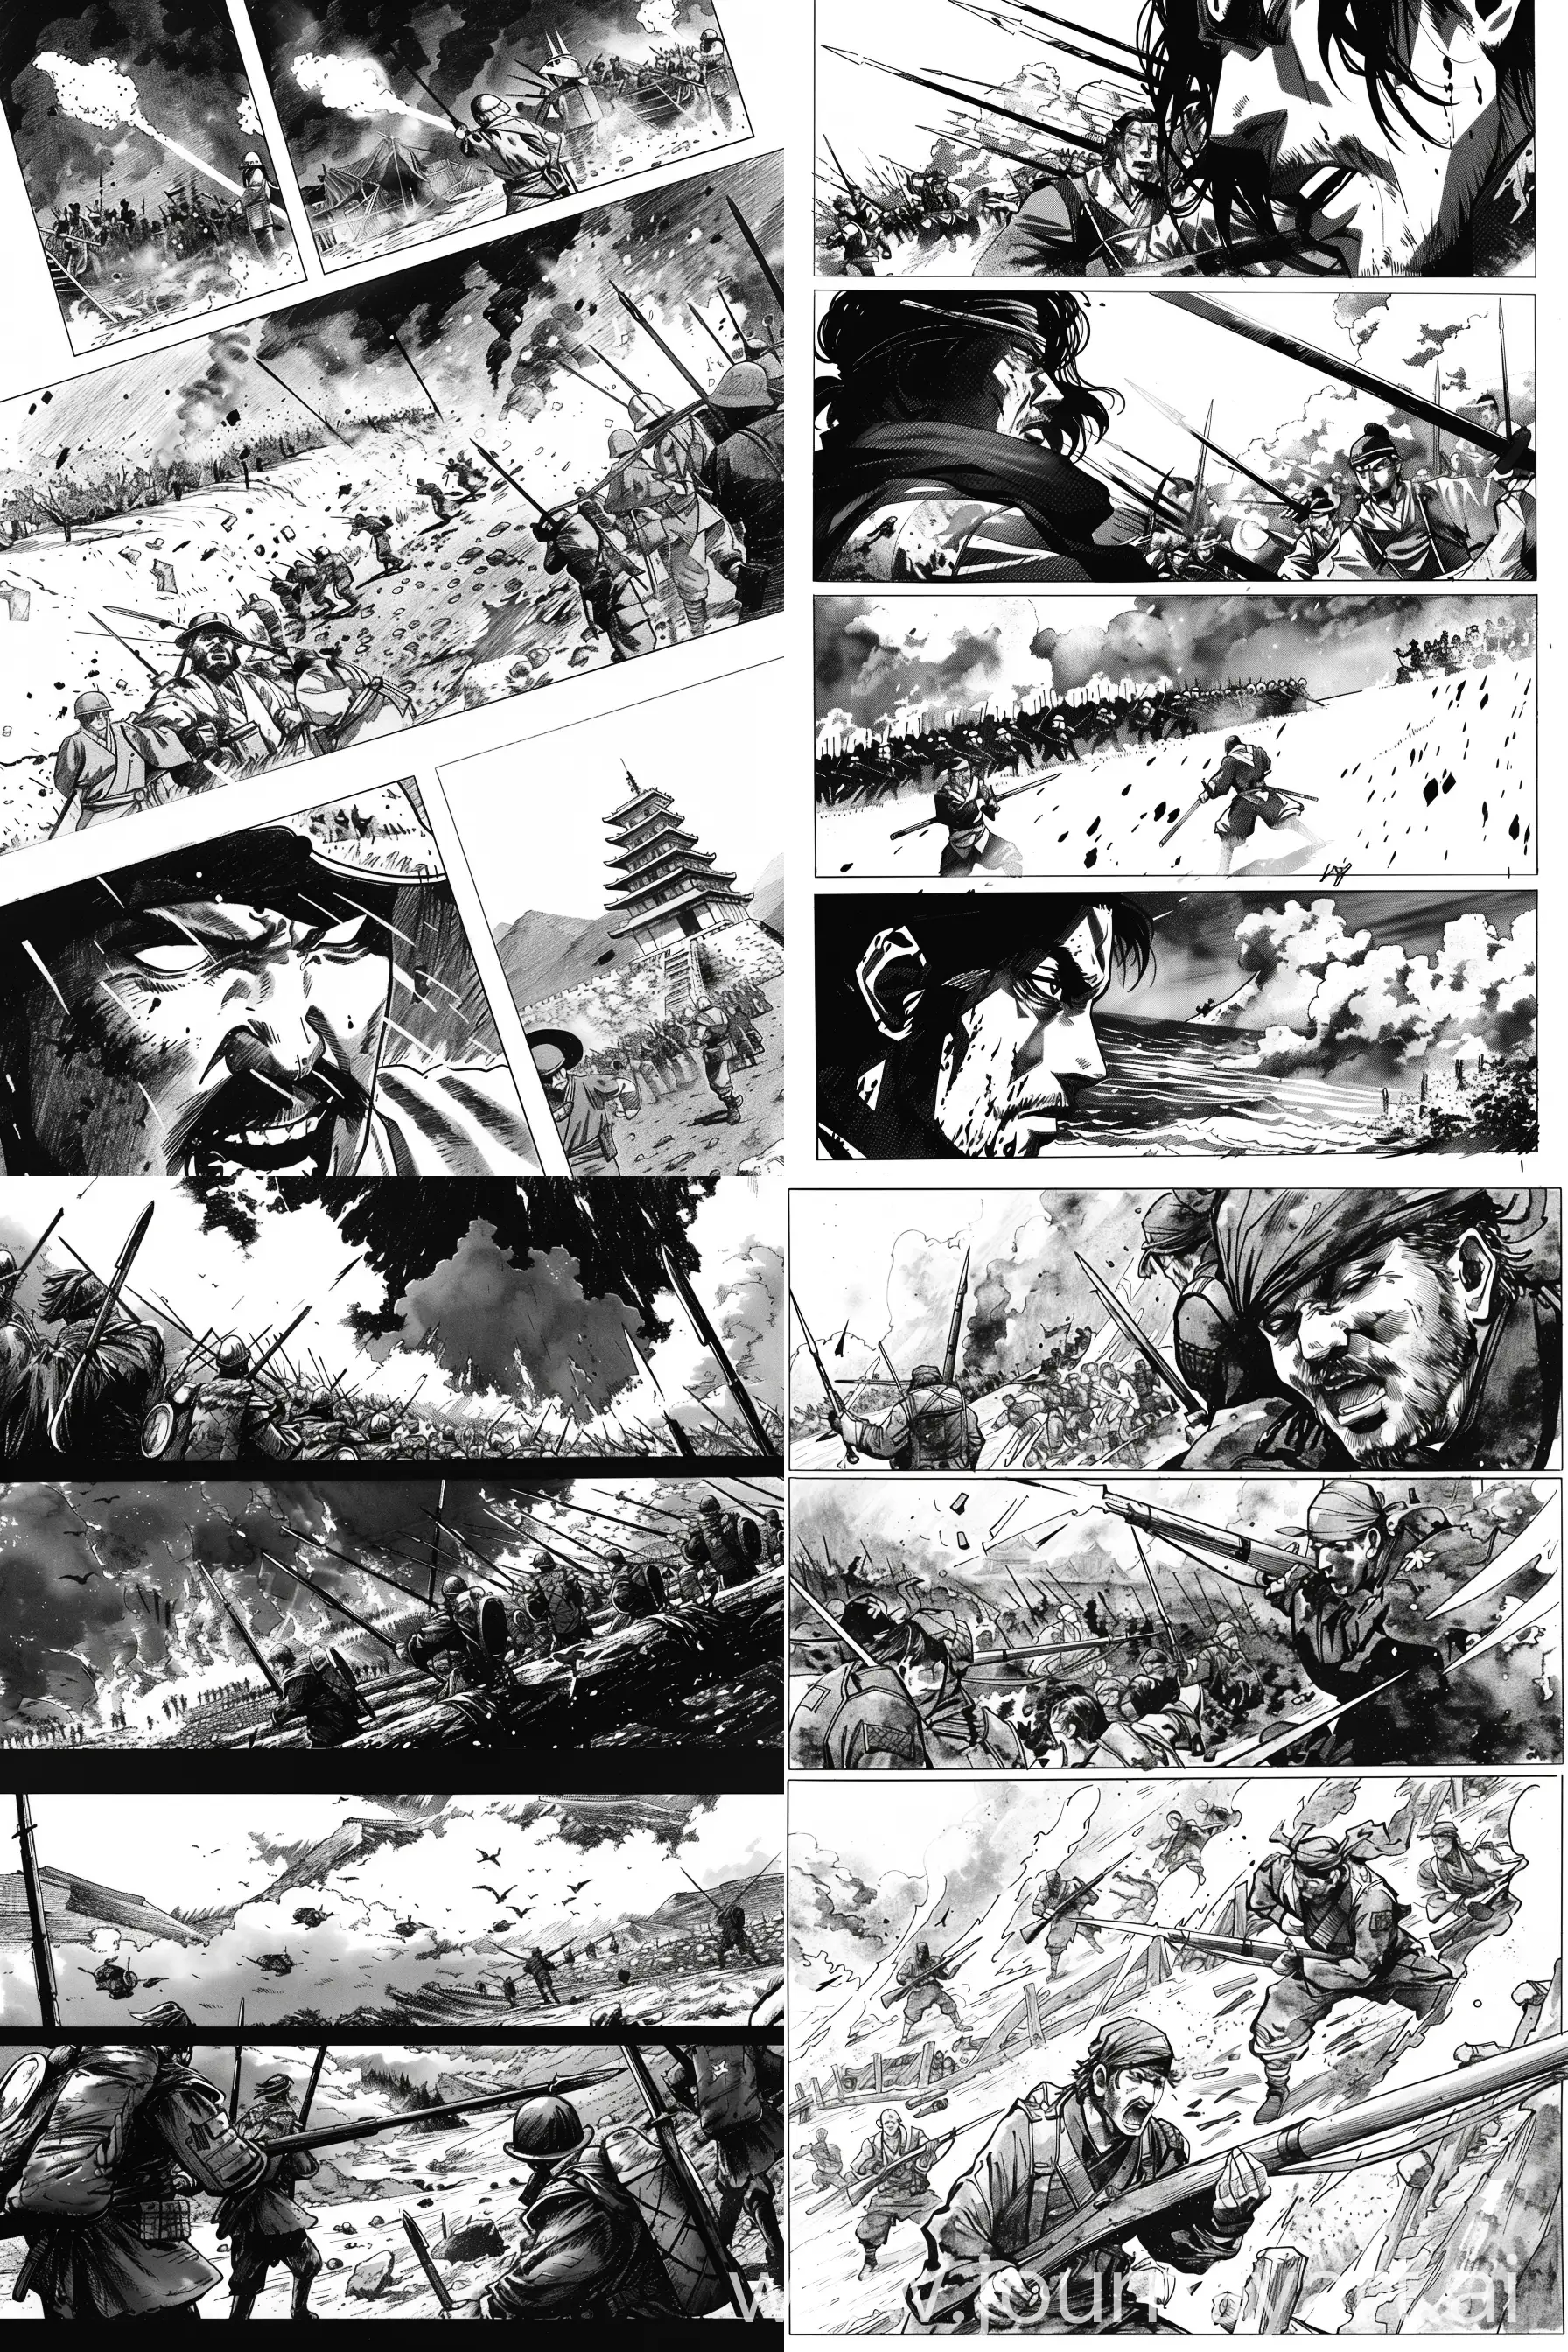 Old-Ninja-War-Scene-in-Manga-Style-Black-and-White-Art